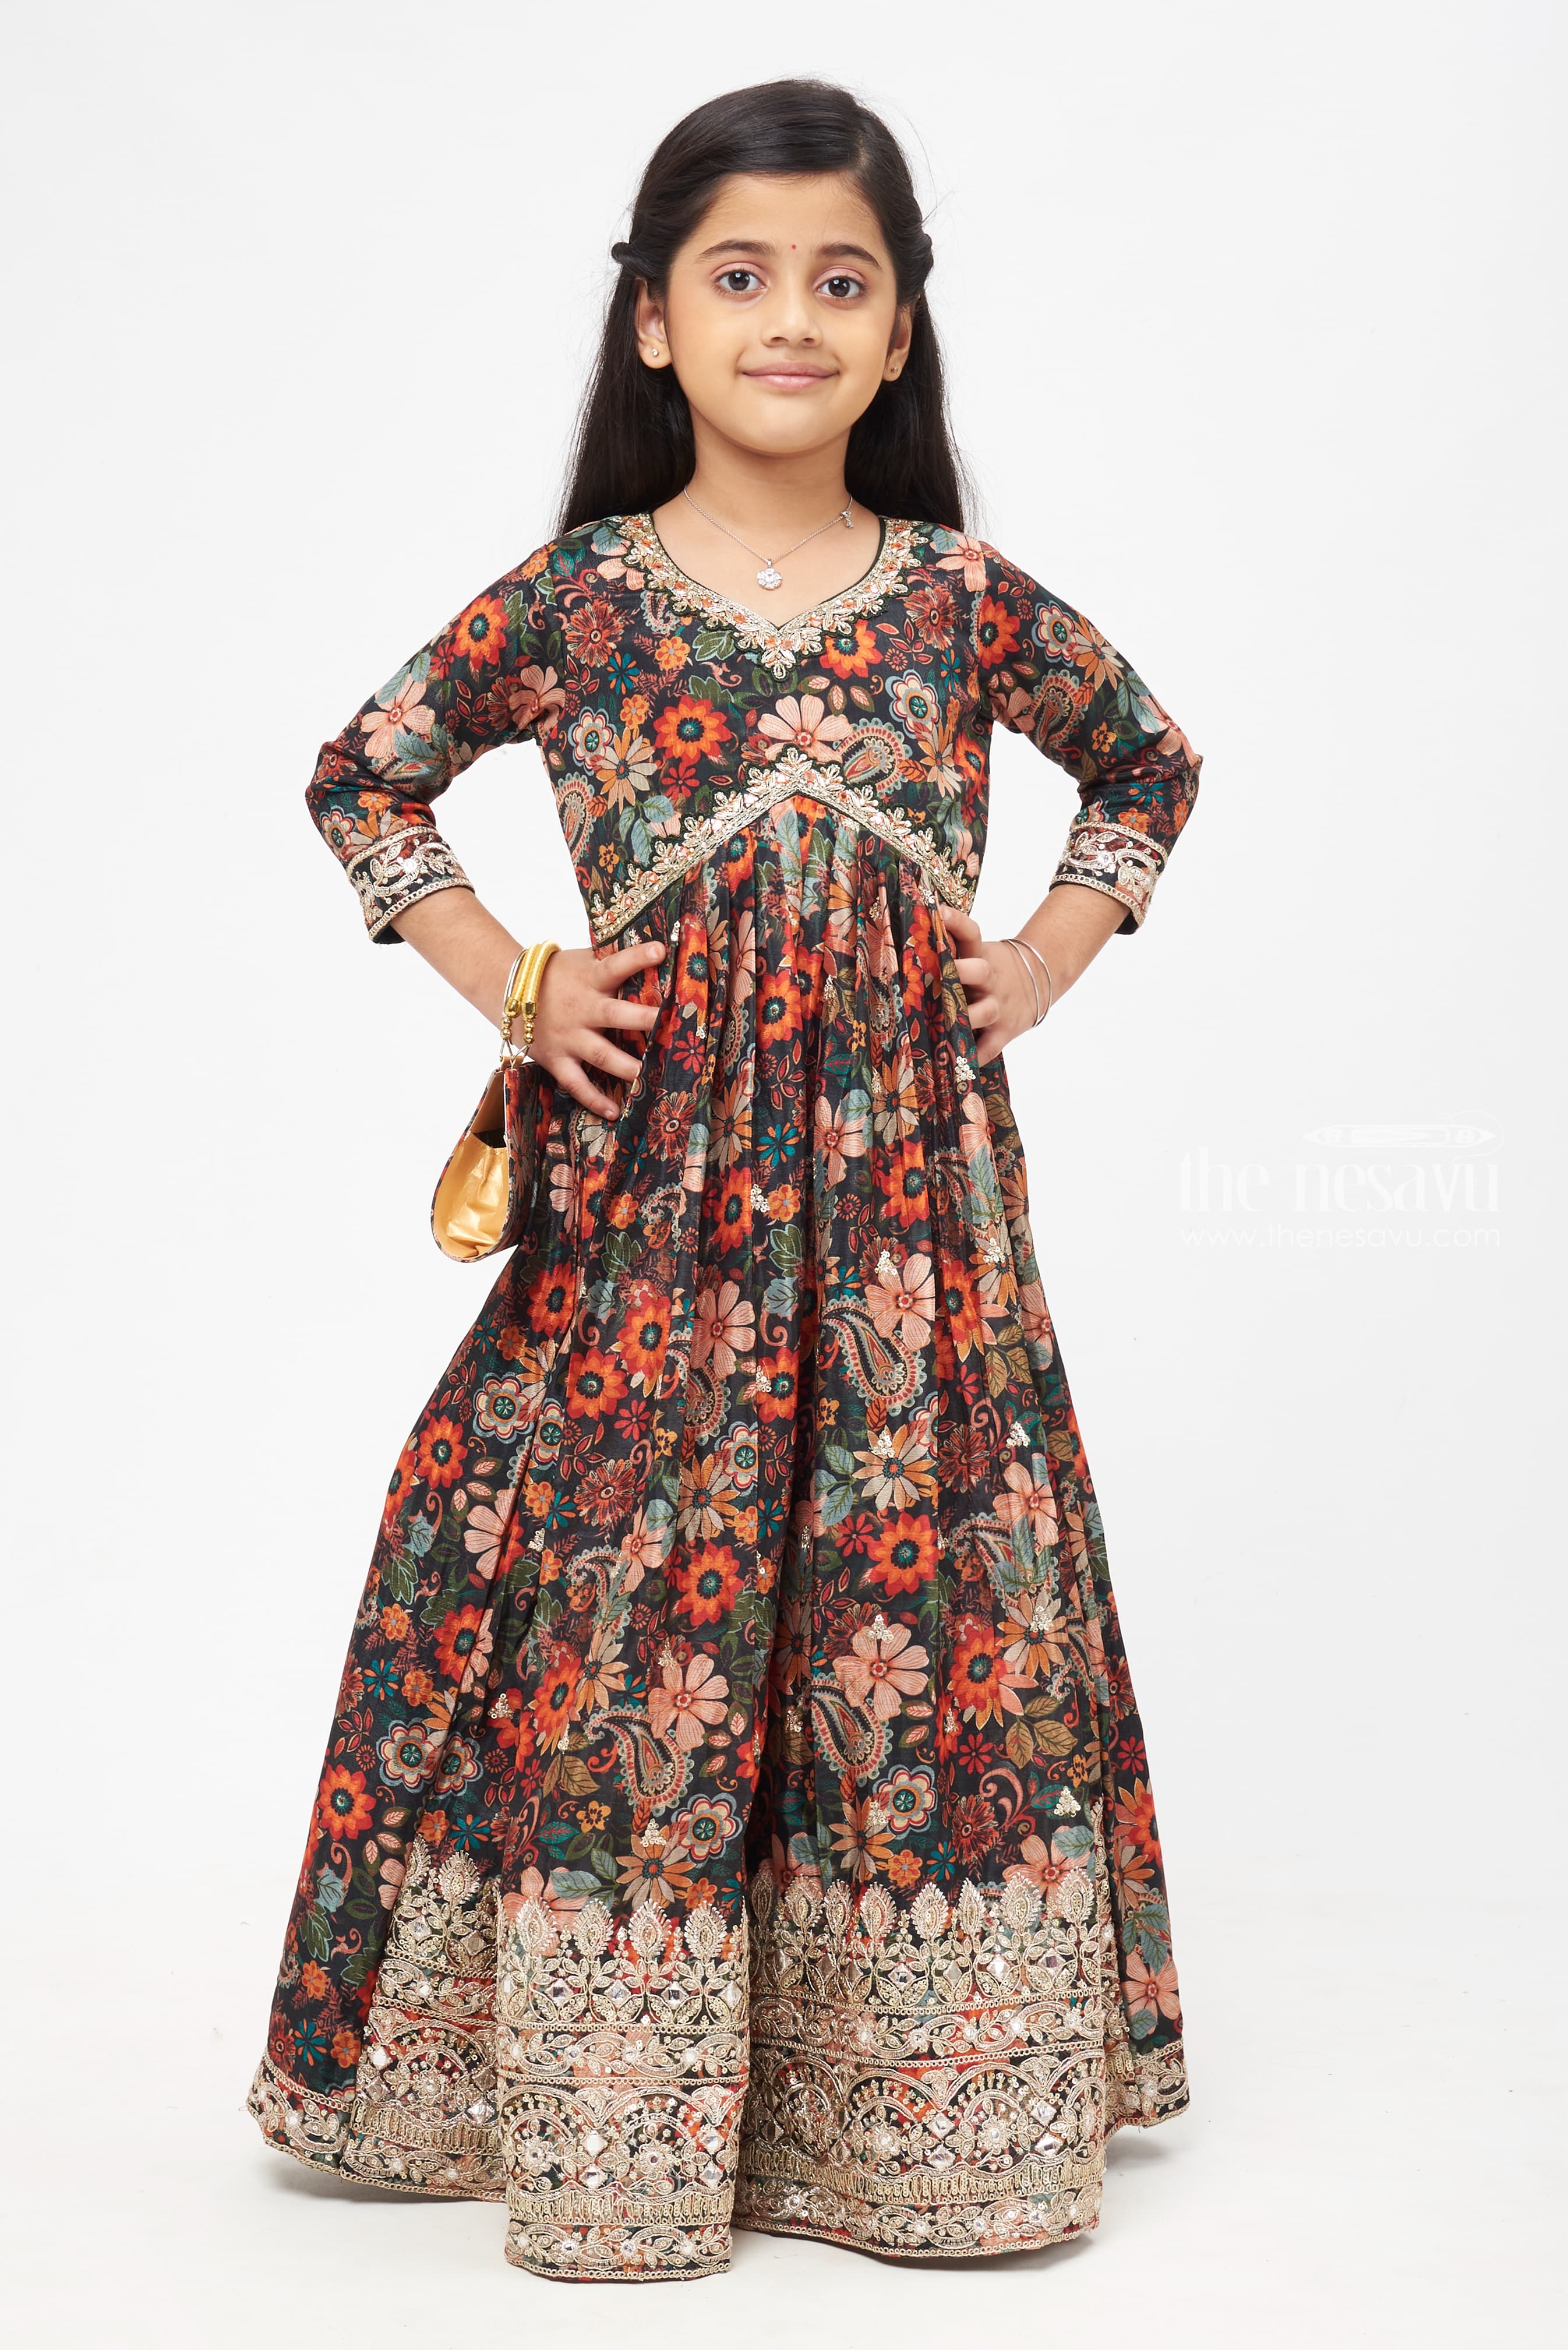 Buy Girls Dresses for Diwali | Girls Clothing | Diwali Dresses